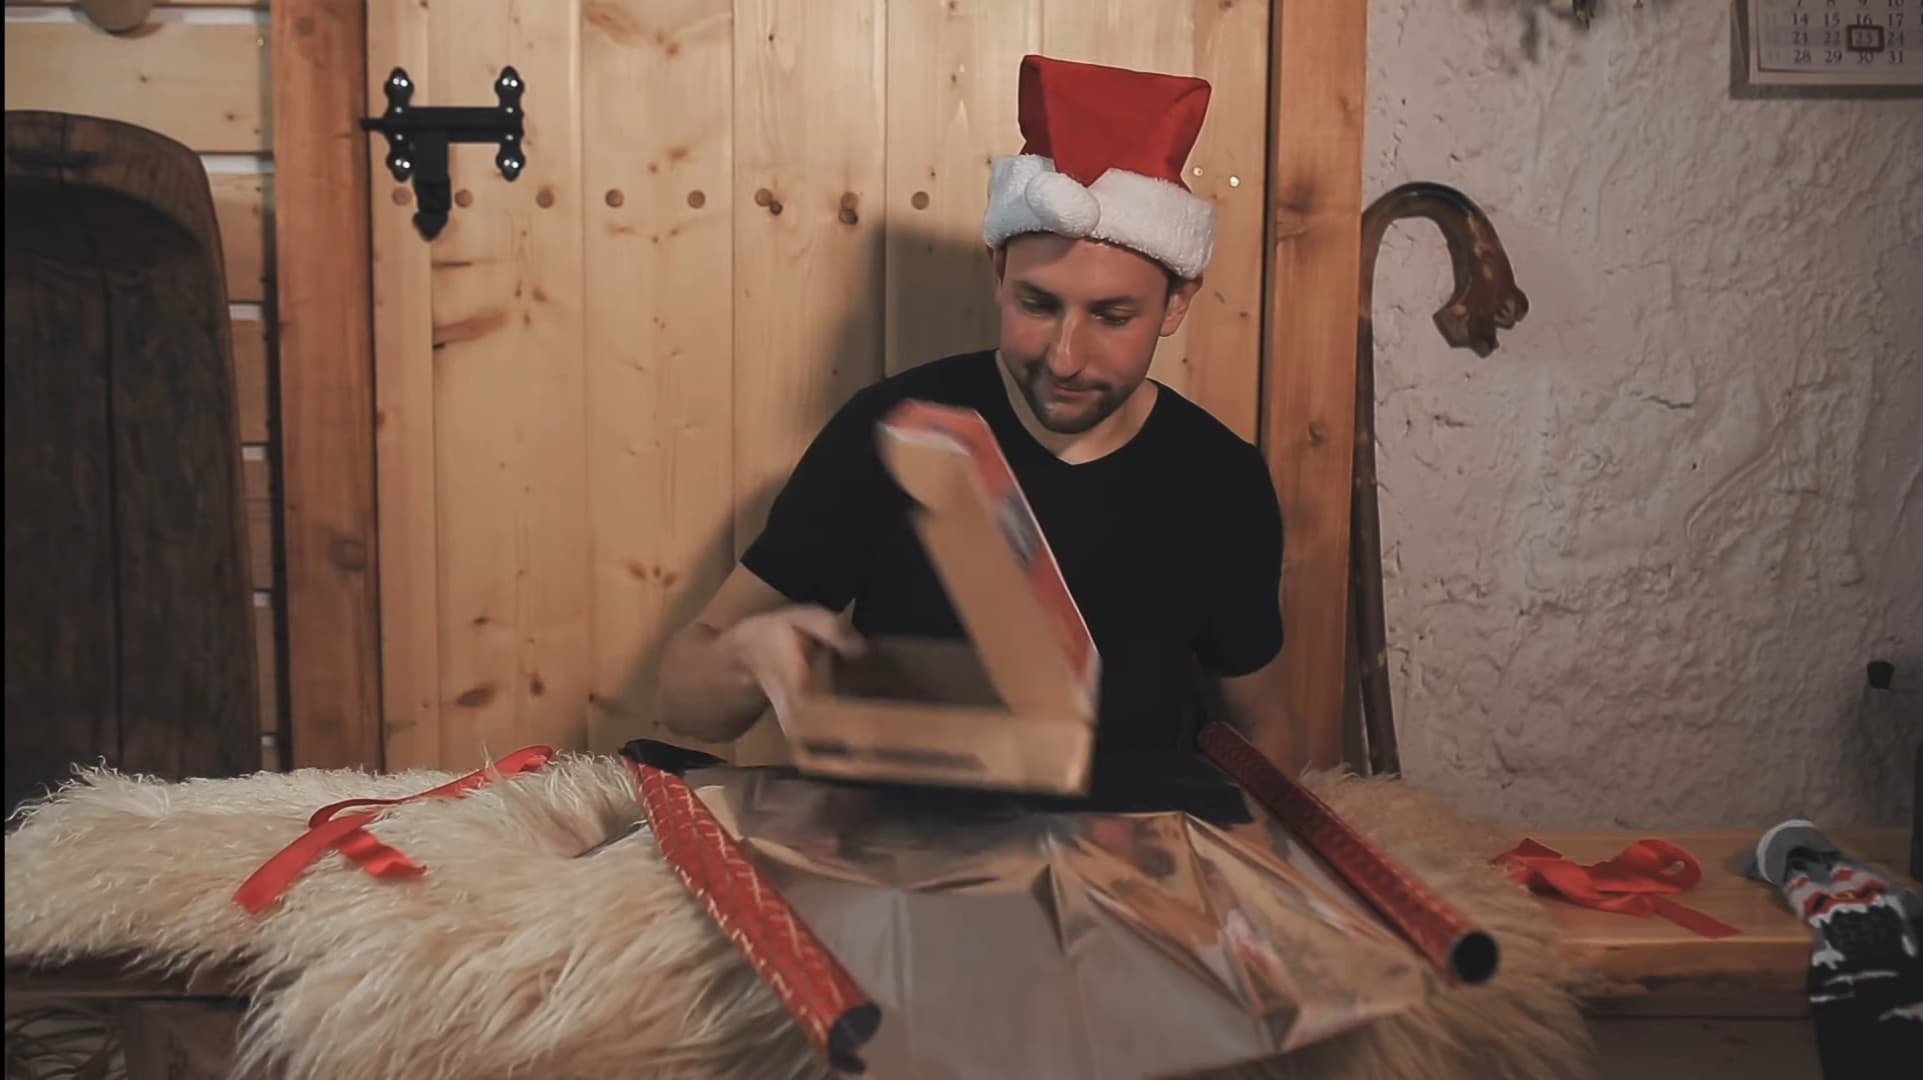 ''Śniegu ni ma'', czyli Merry Christmas po góralsku! [WIDEO]